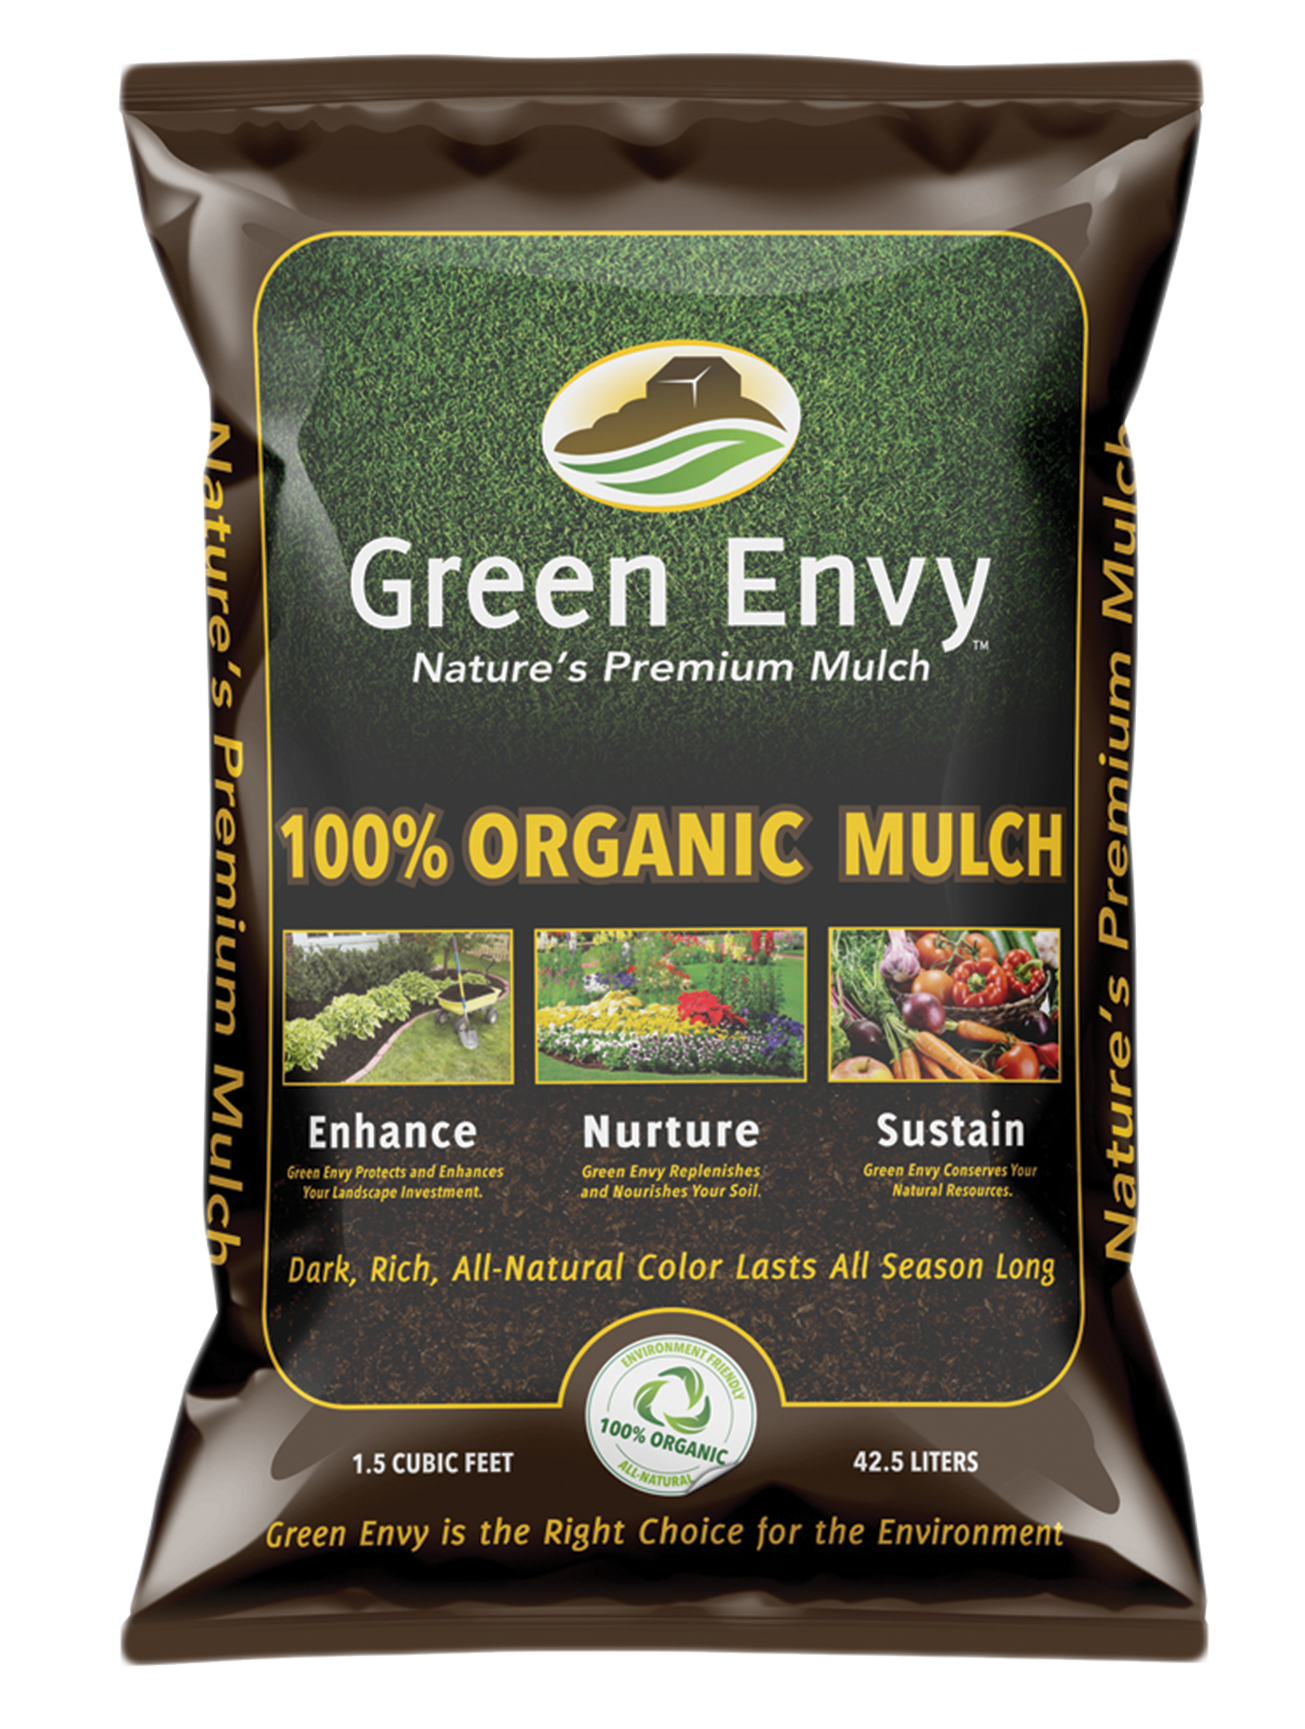 Bag of Green Envy Garden Mulch